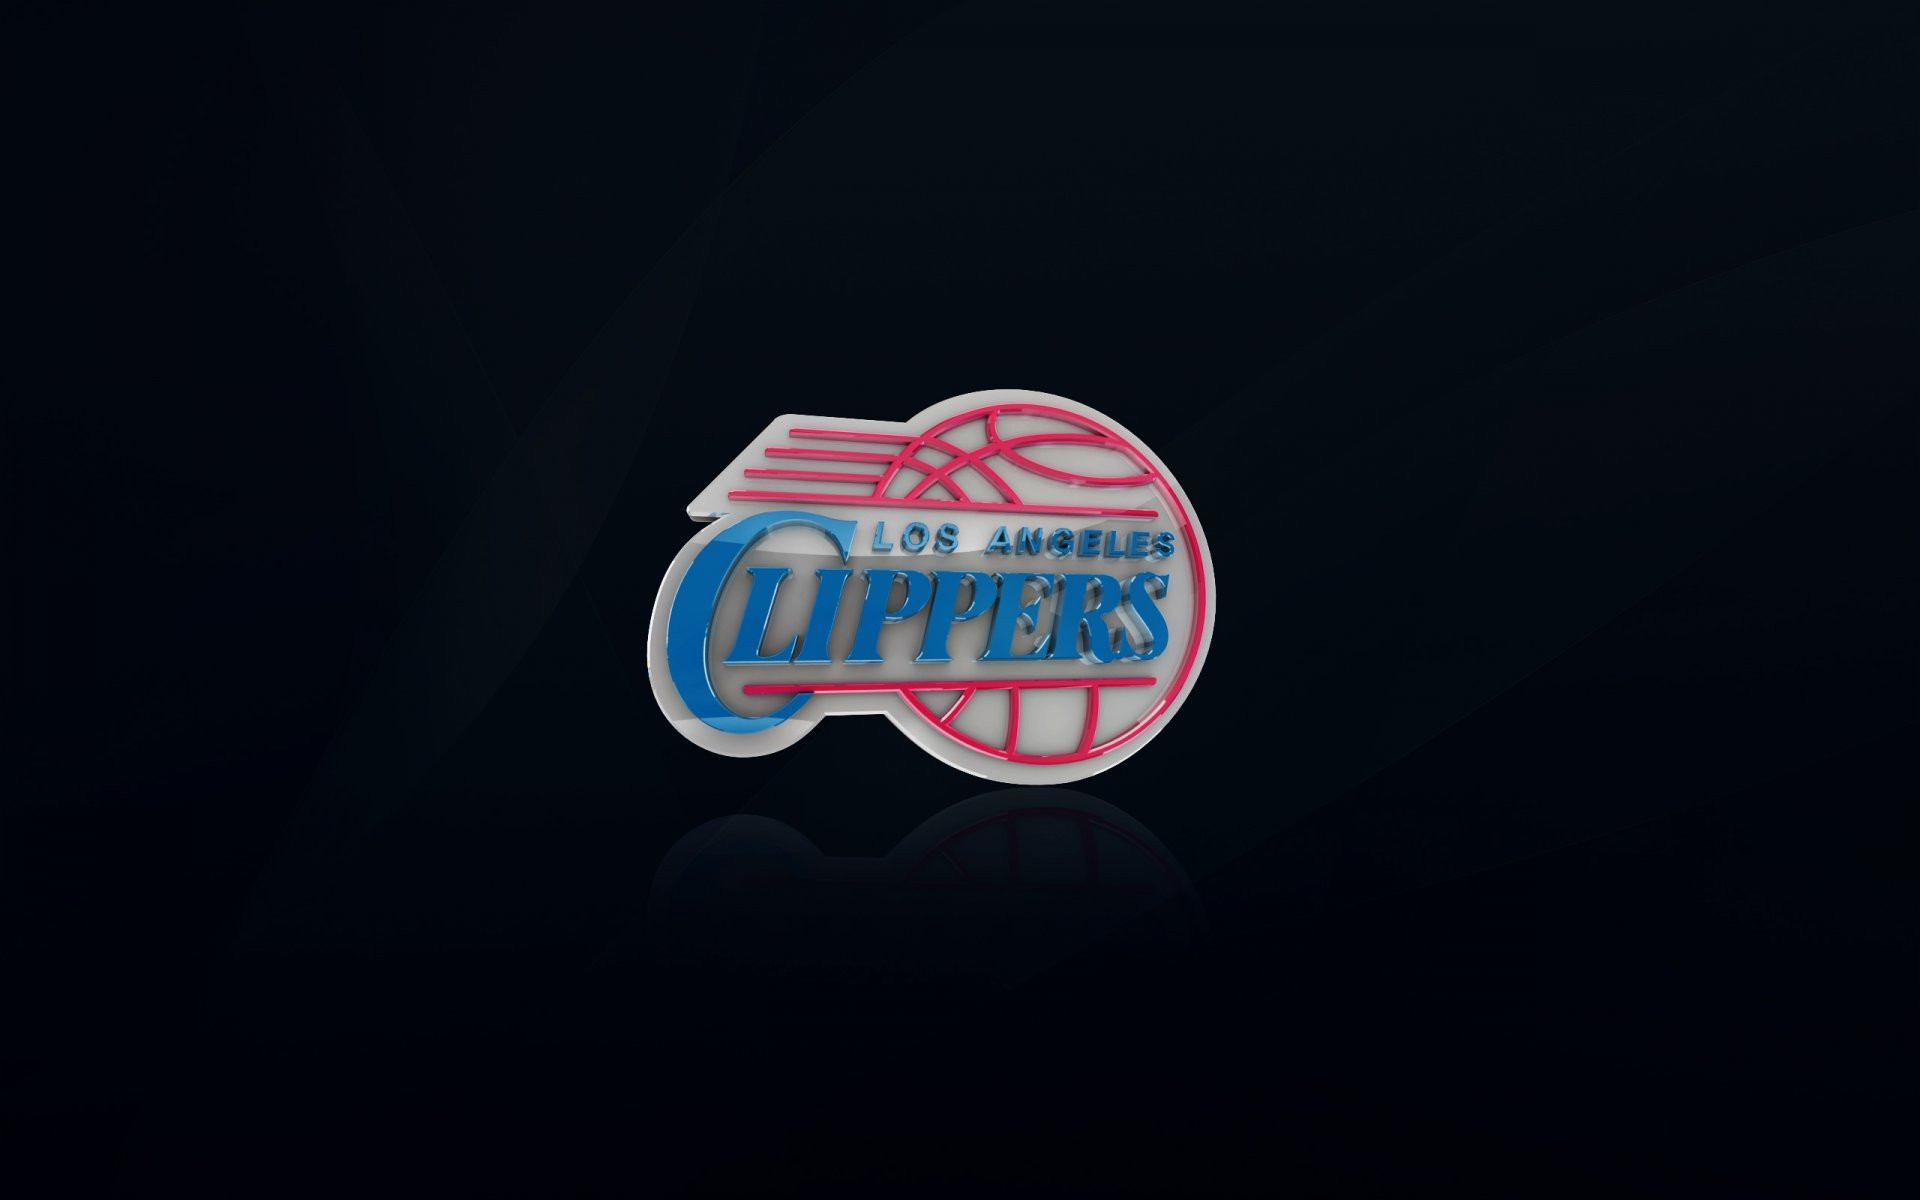 Losangeles Clippers Logo Wallpapers Download Free Pixelstalk Net